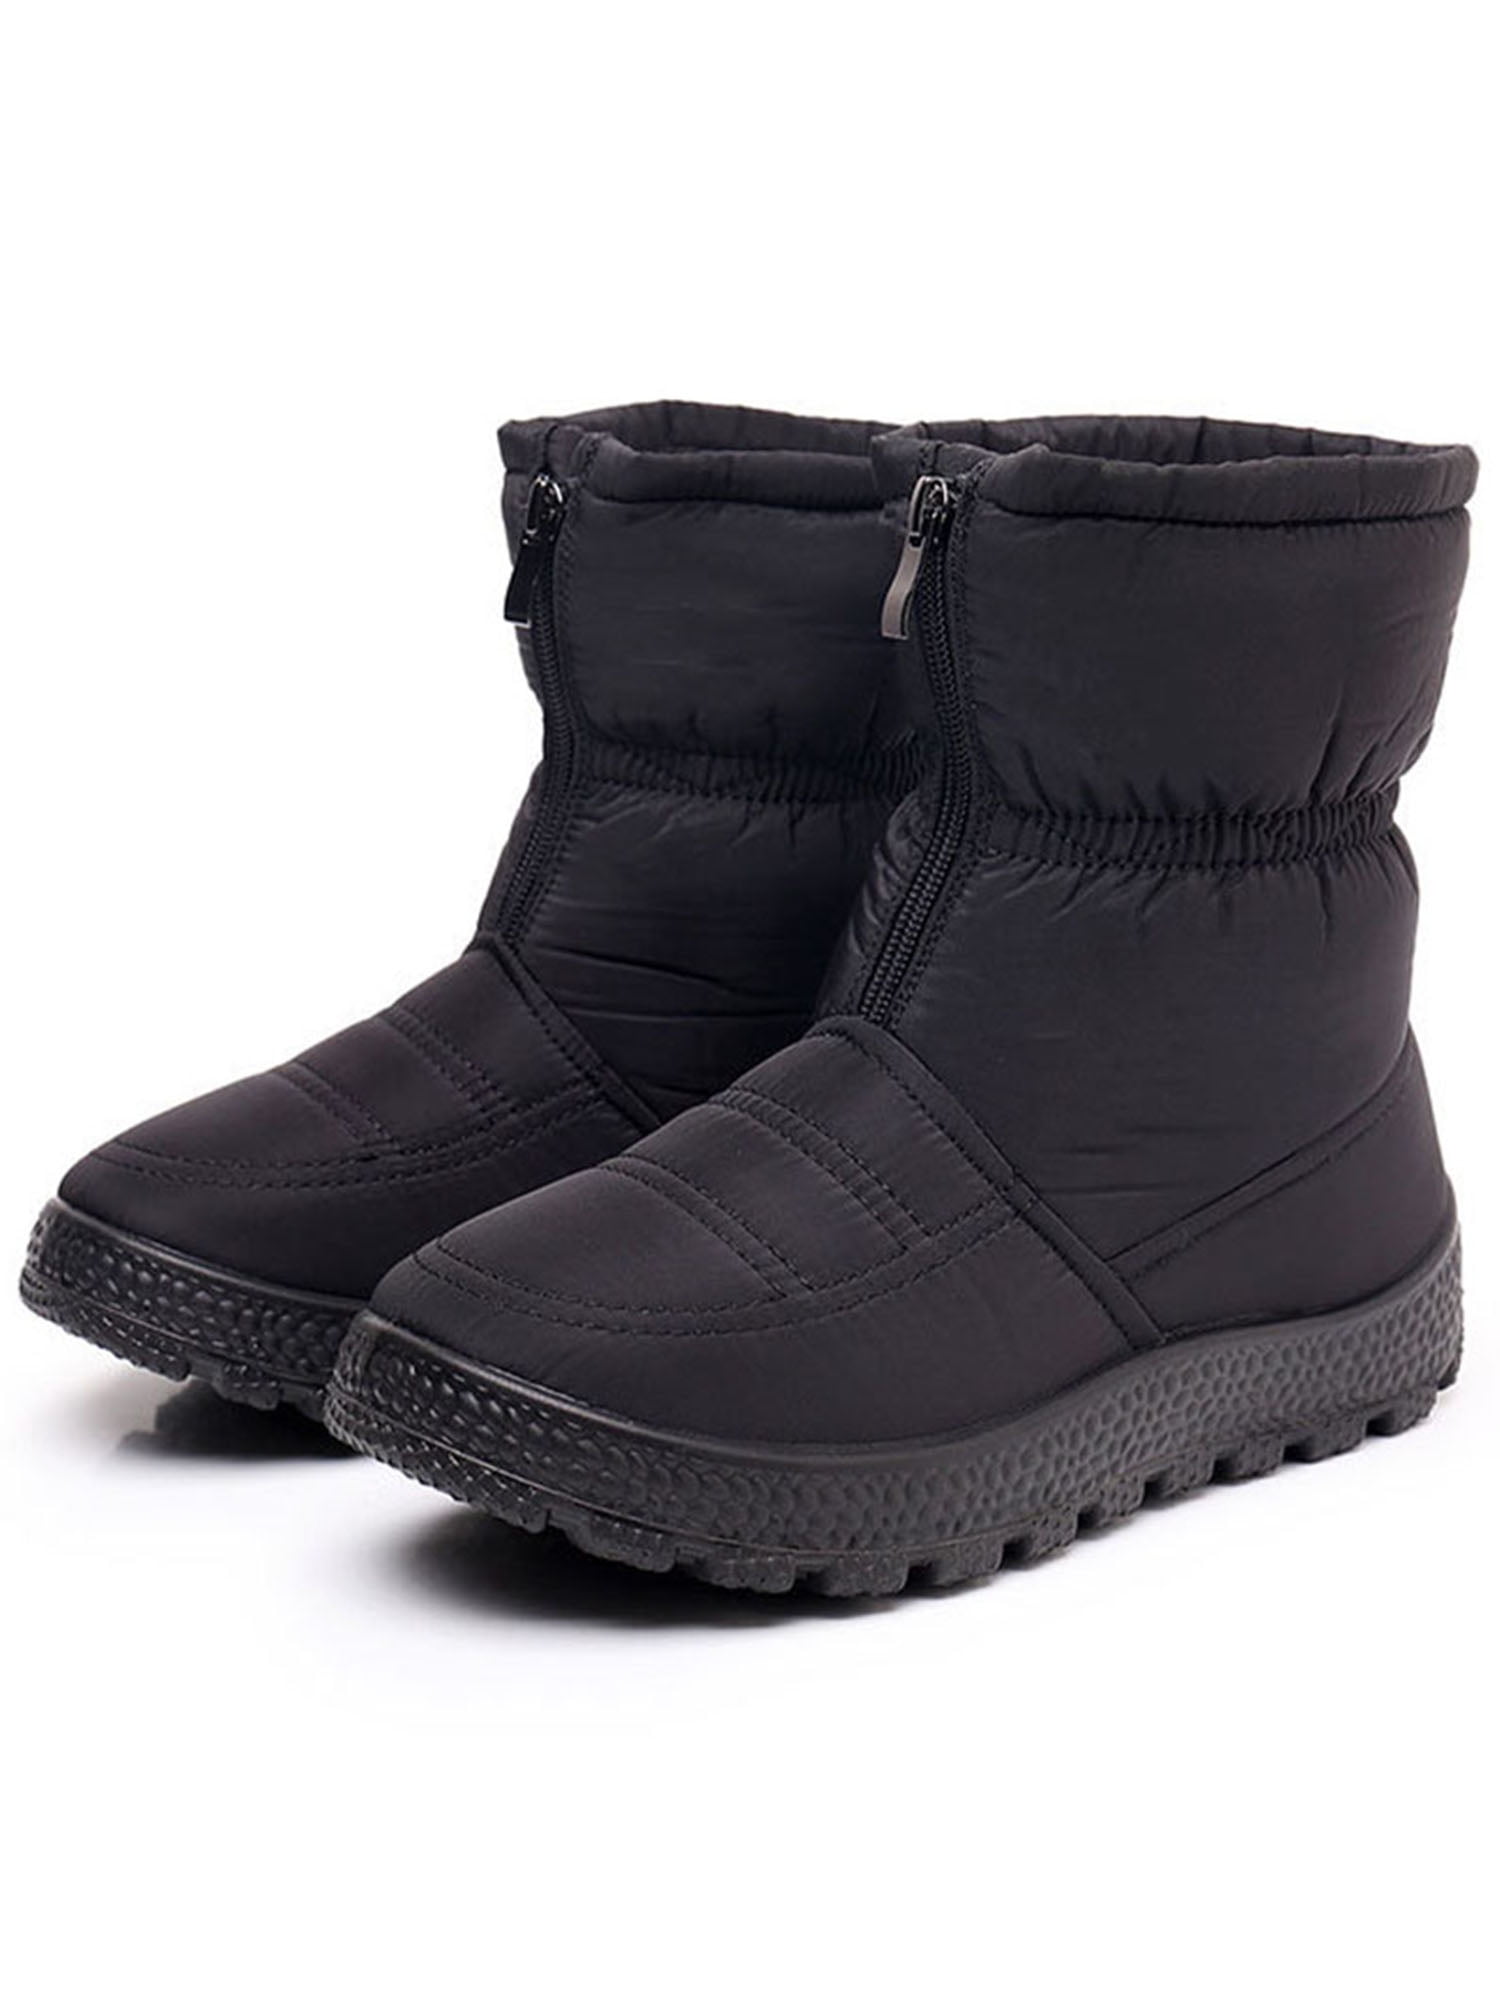 Ritualay Women Breathable Snow Boots Non Slip Round Toe Outdoor Cold ...